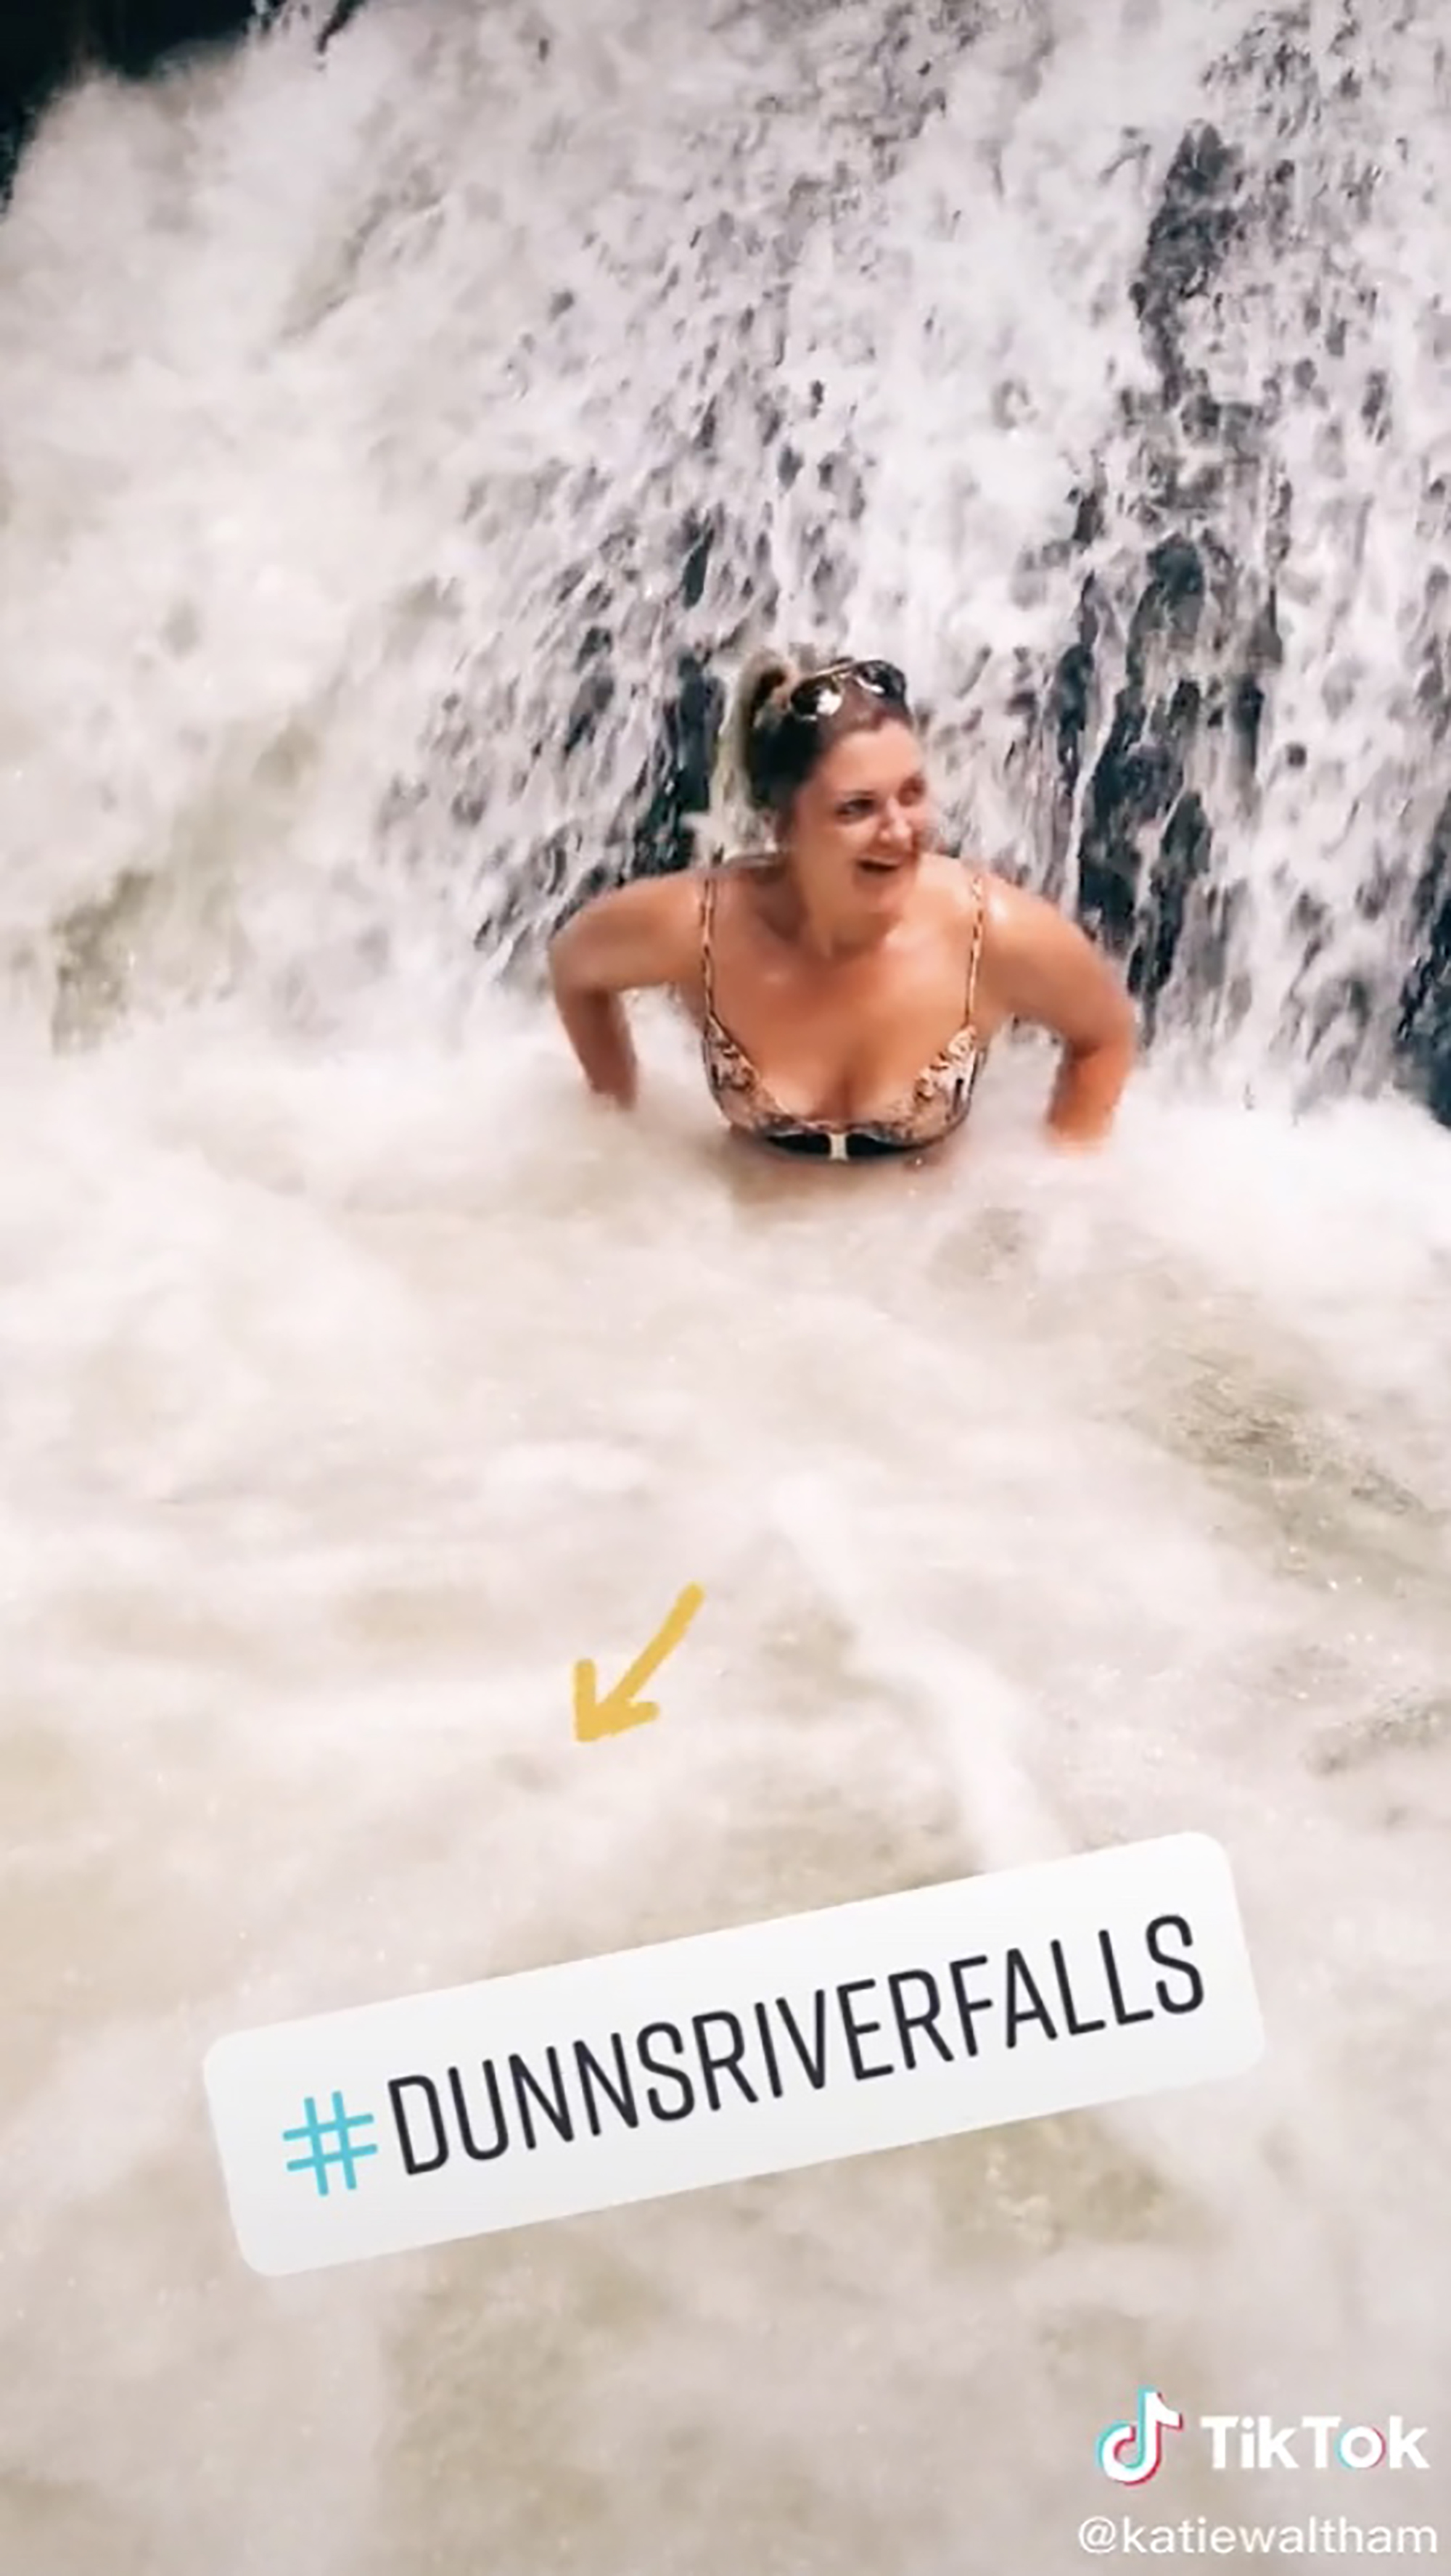 dar wayne recommends bikini falls off video pic